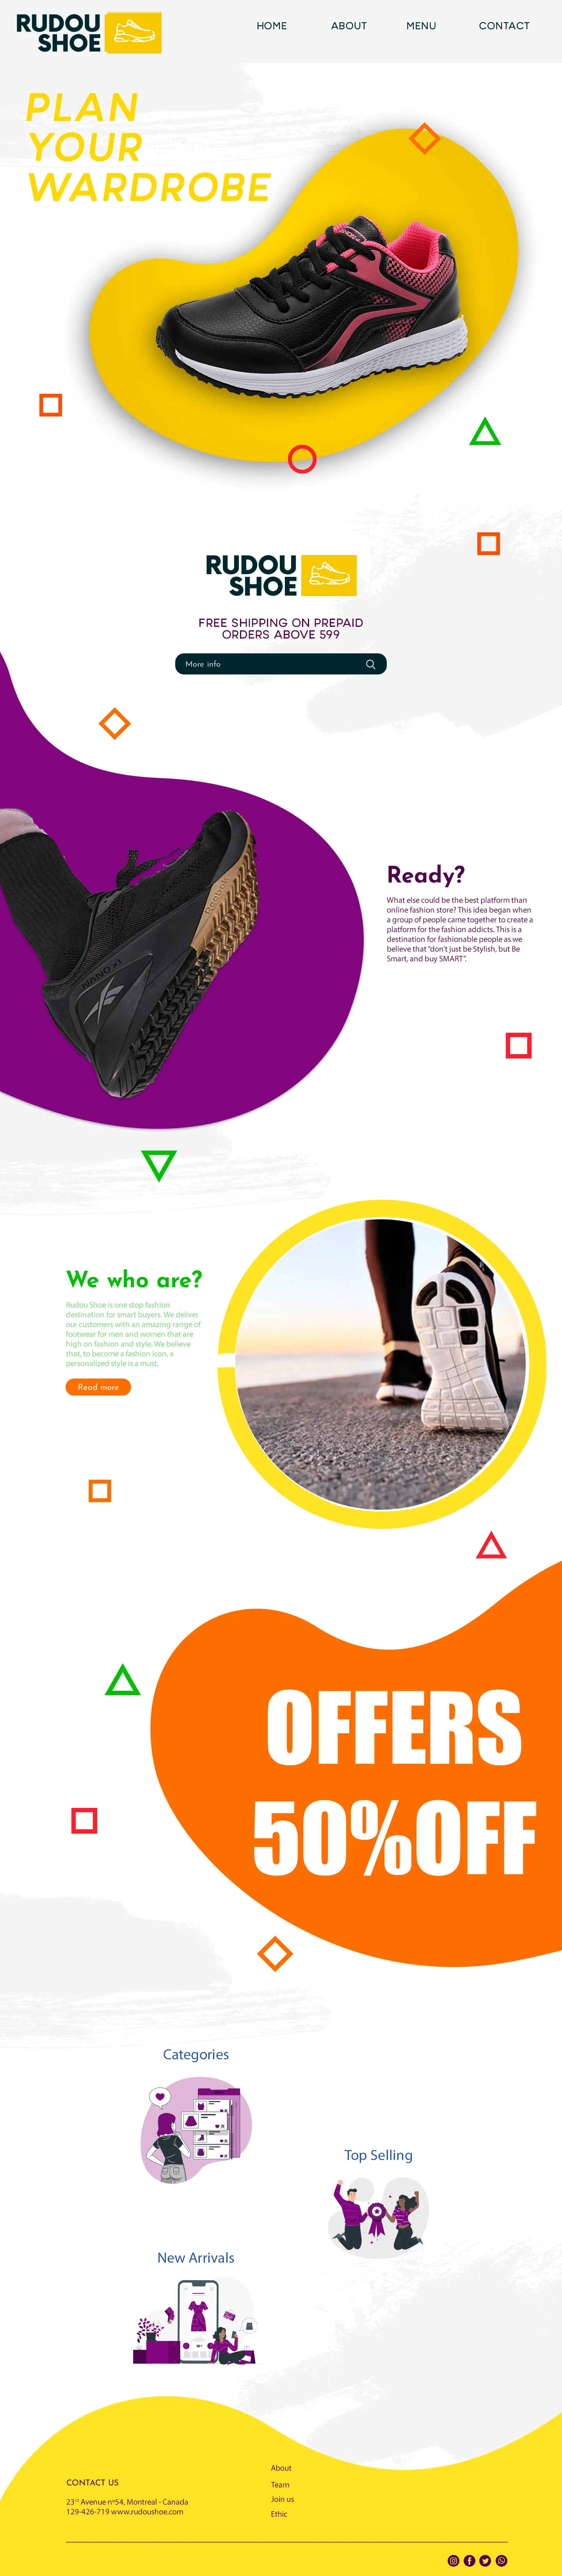 Rudou - Shoe Website Design